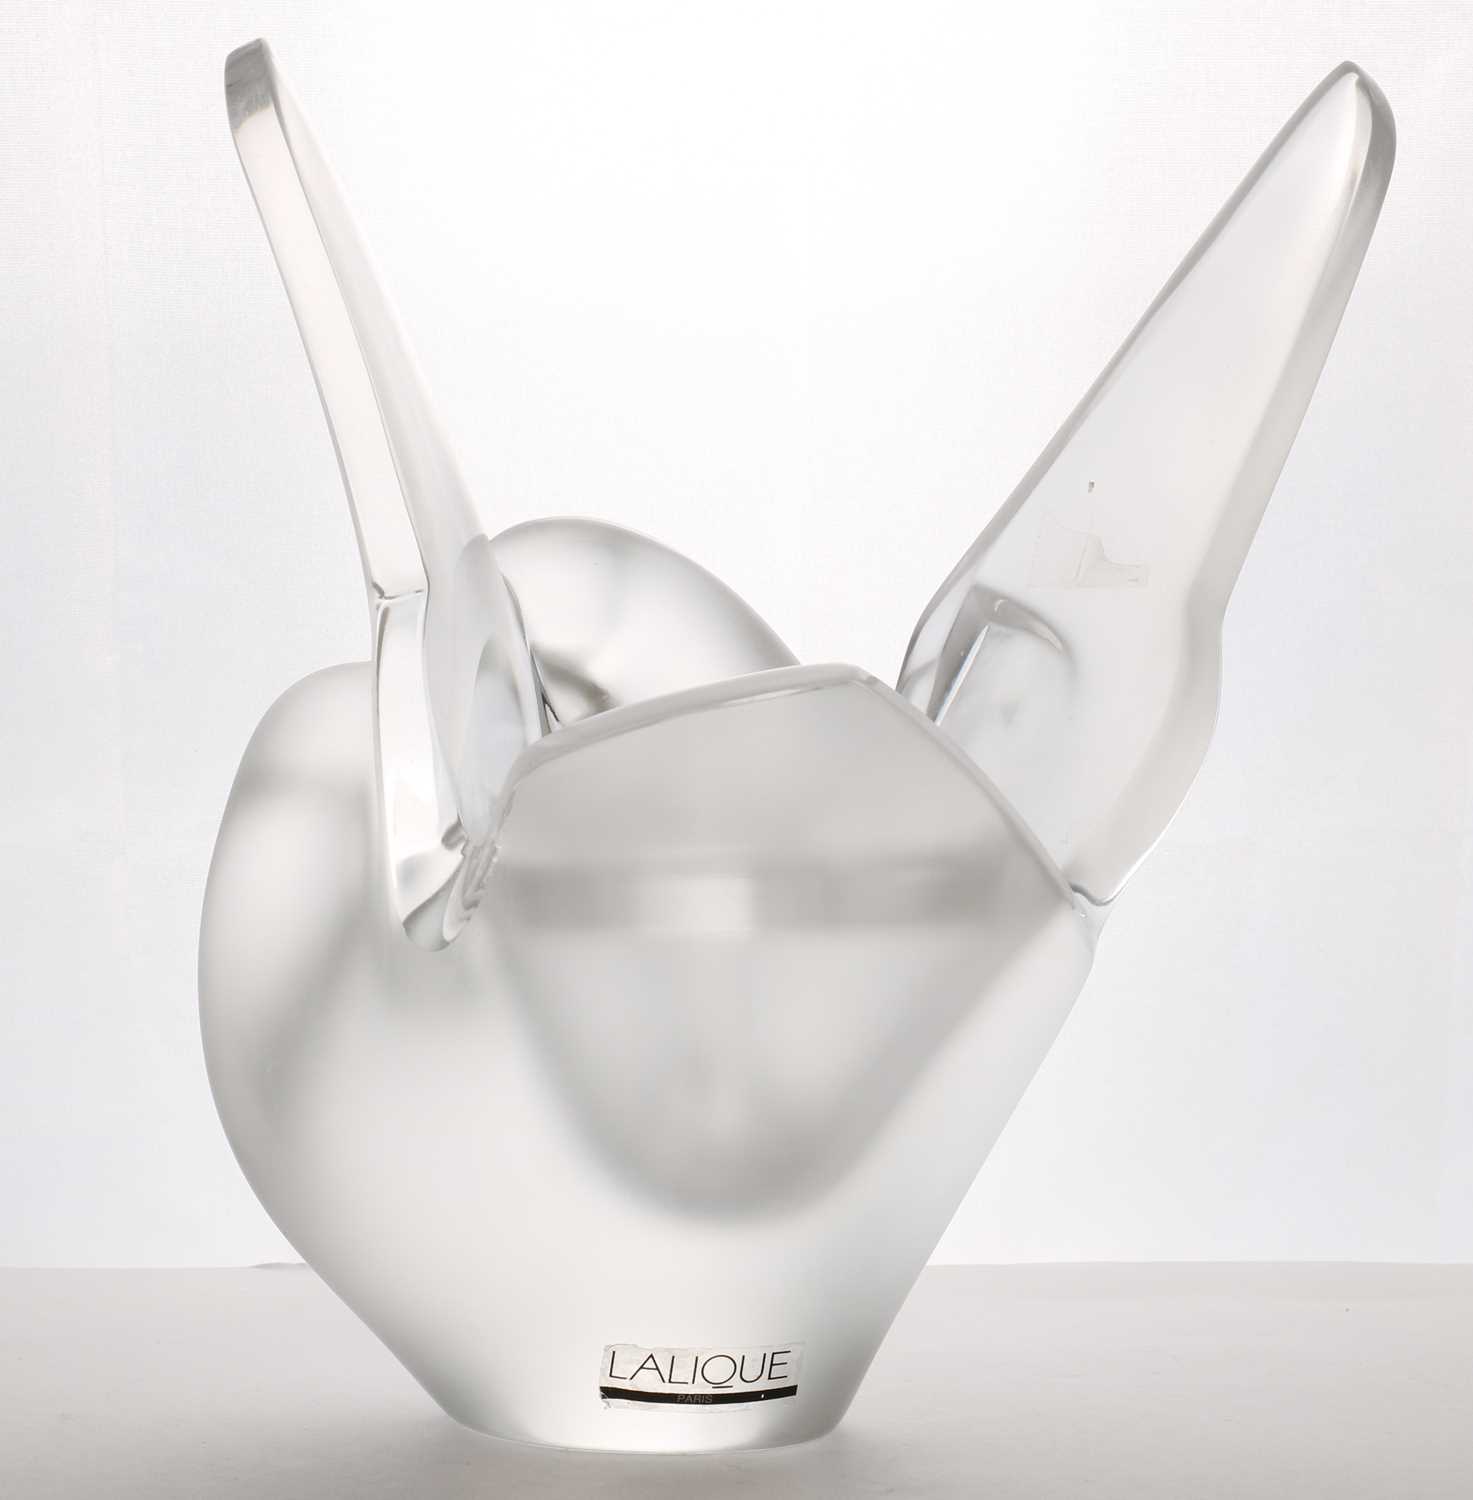 A Lalique glass 'Sylvie' vase - Image 2 of 5